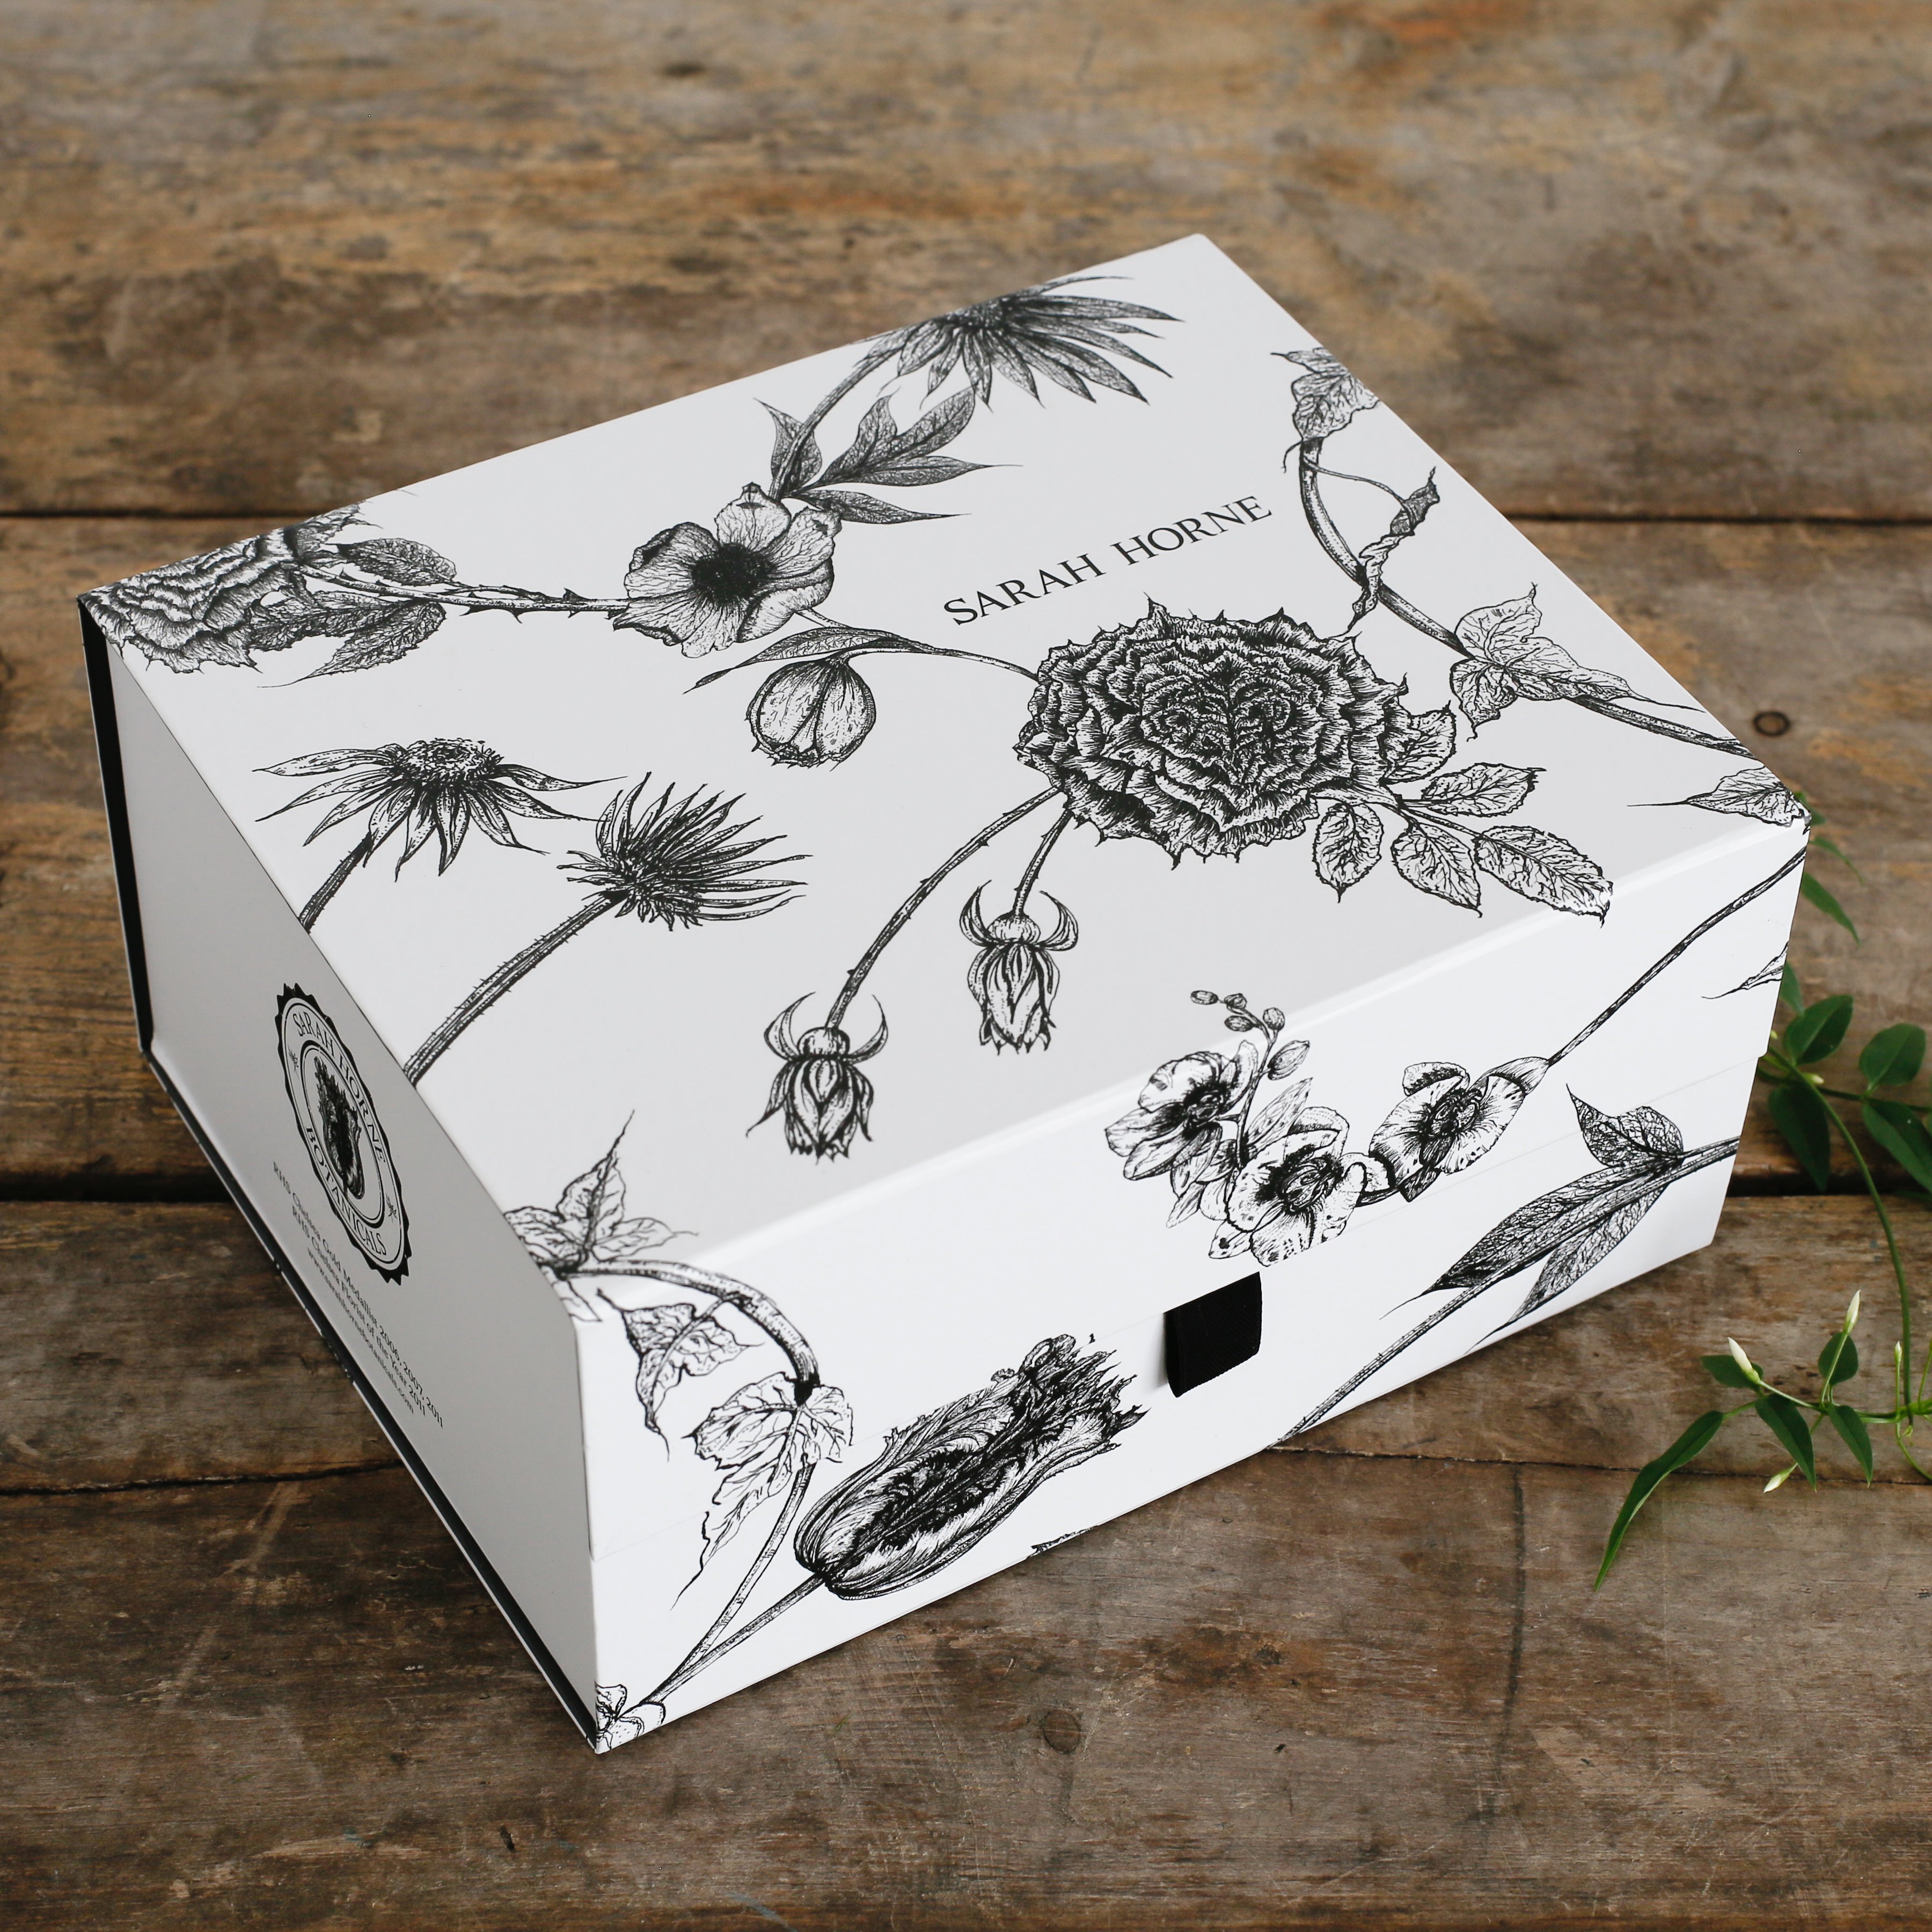 A gift Box